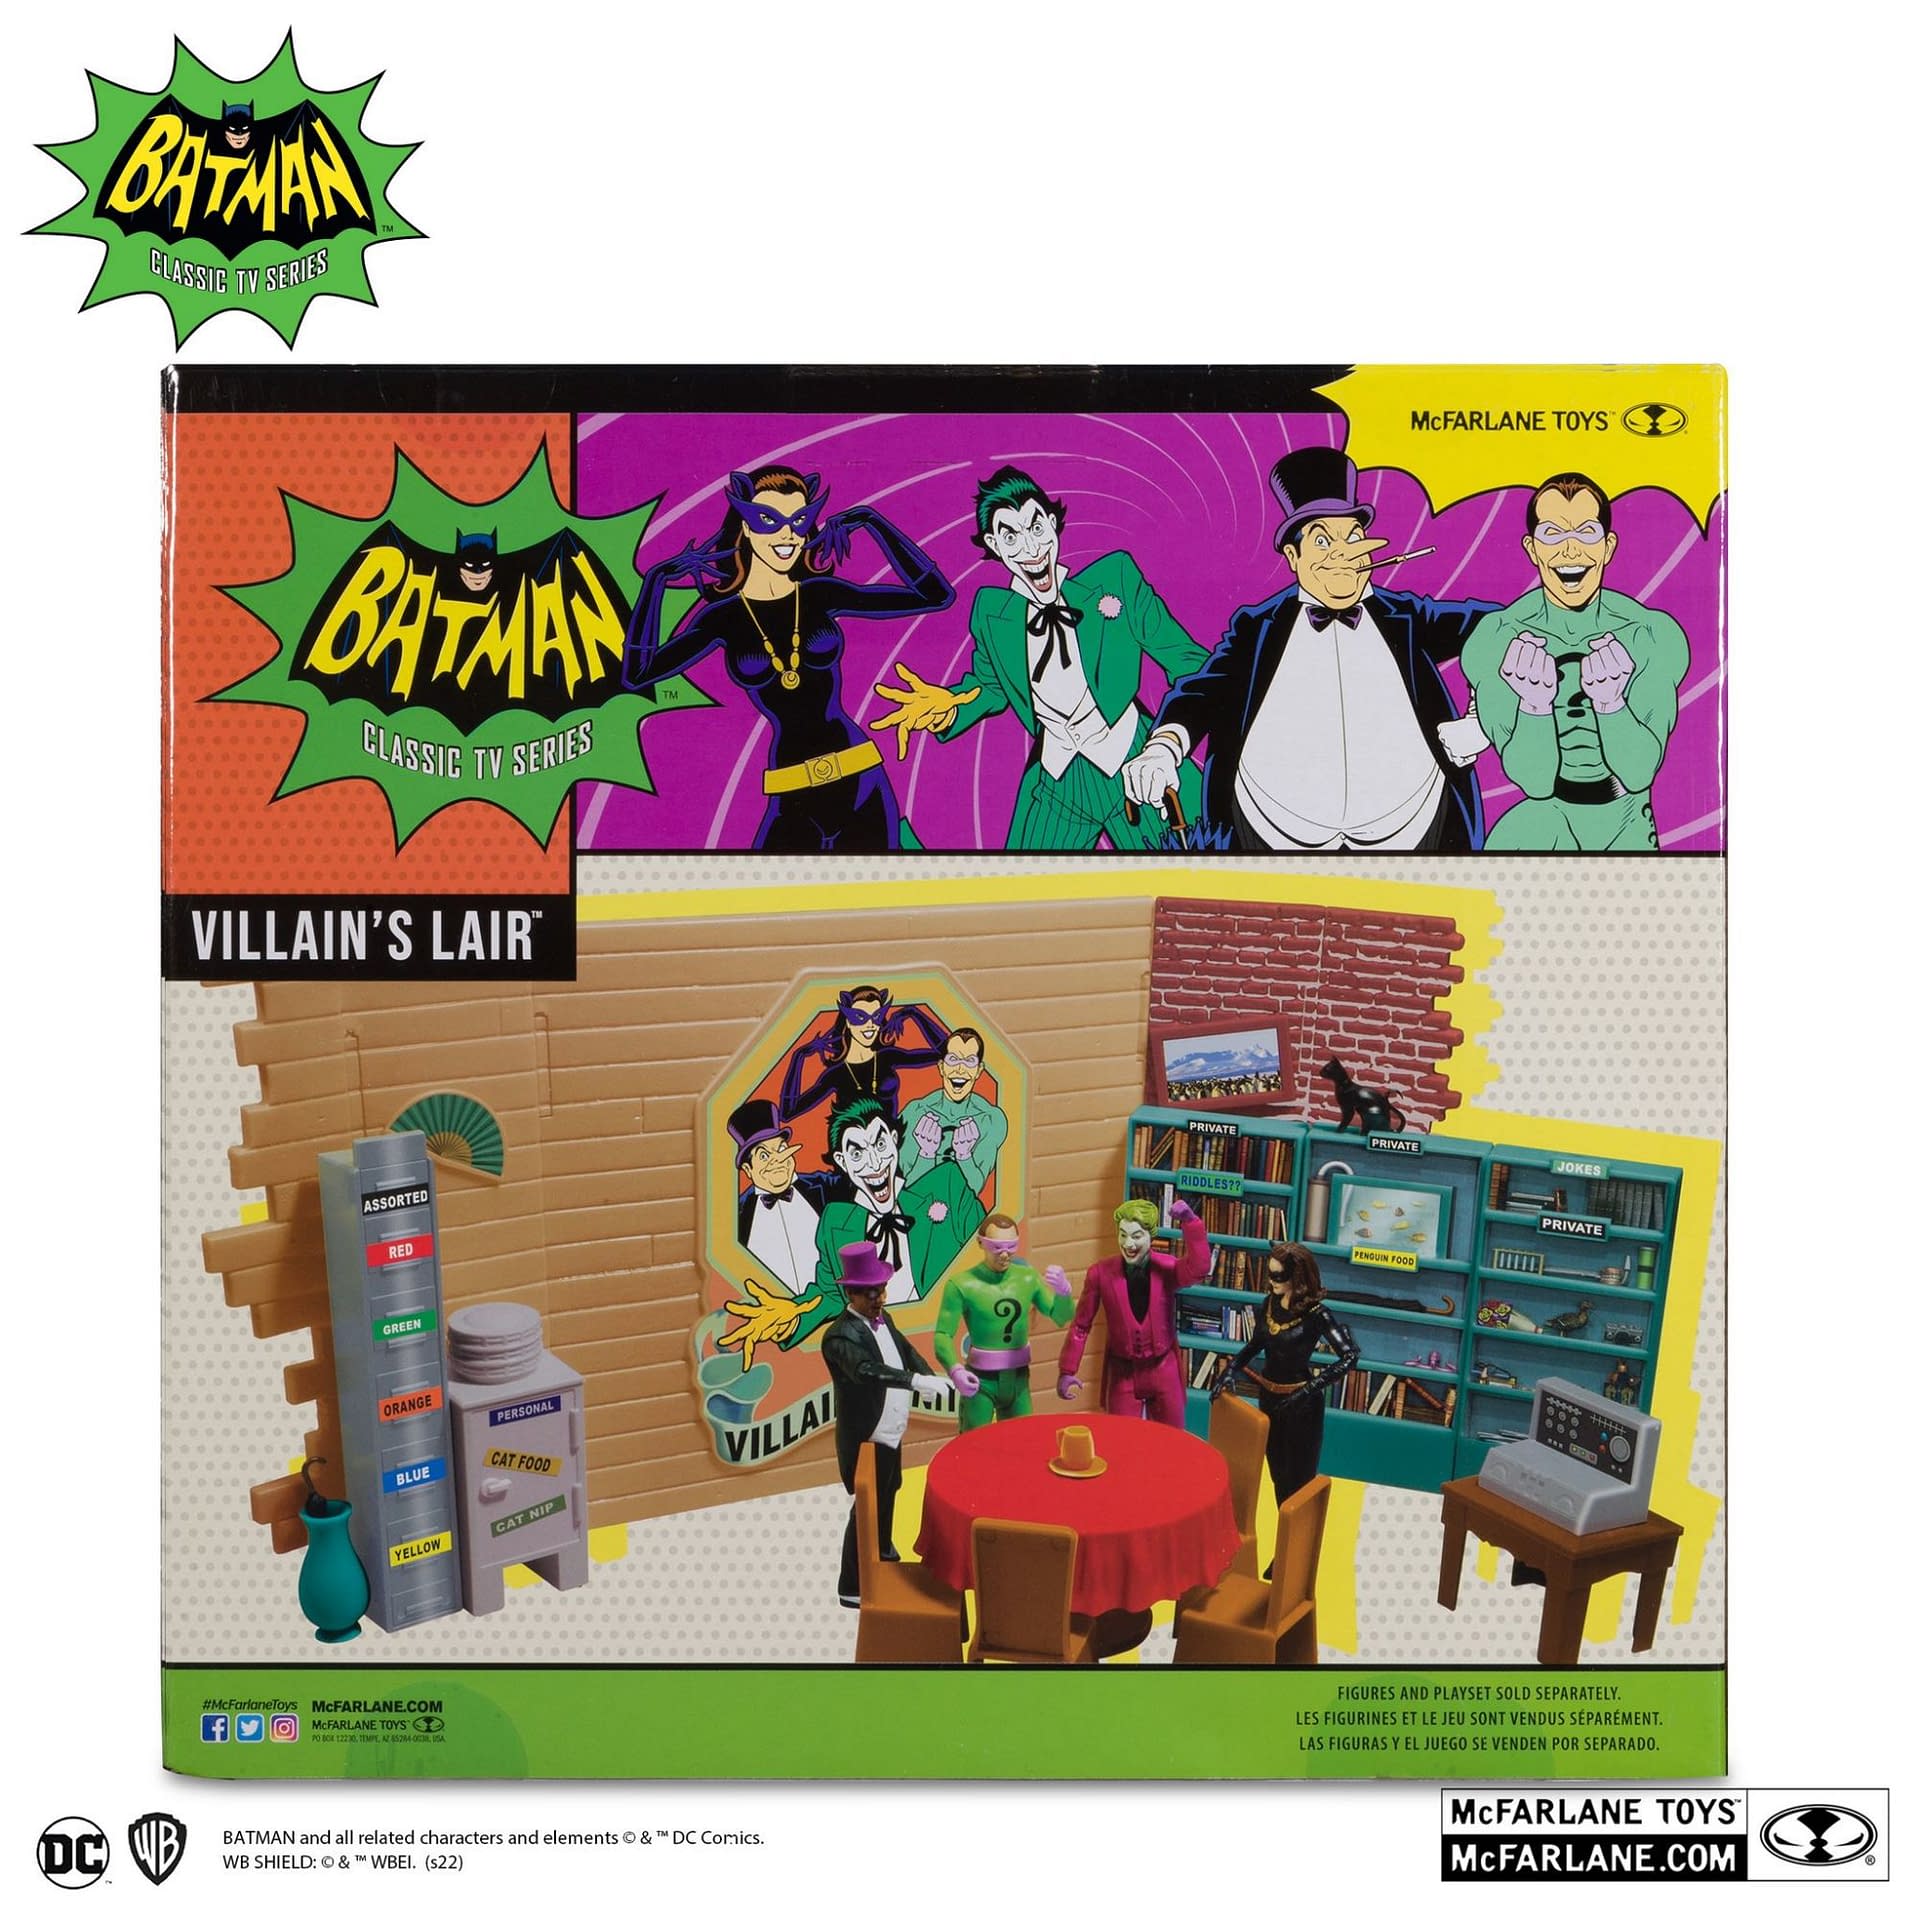 McFarlane Toys Debuts Batman 66' Villian's Lair Playset